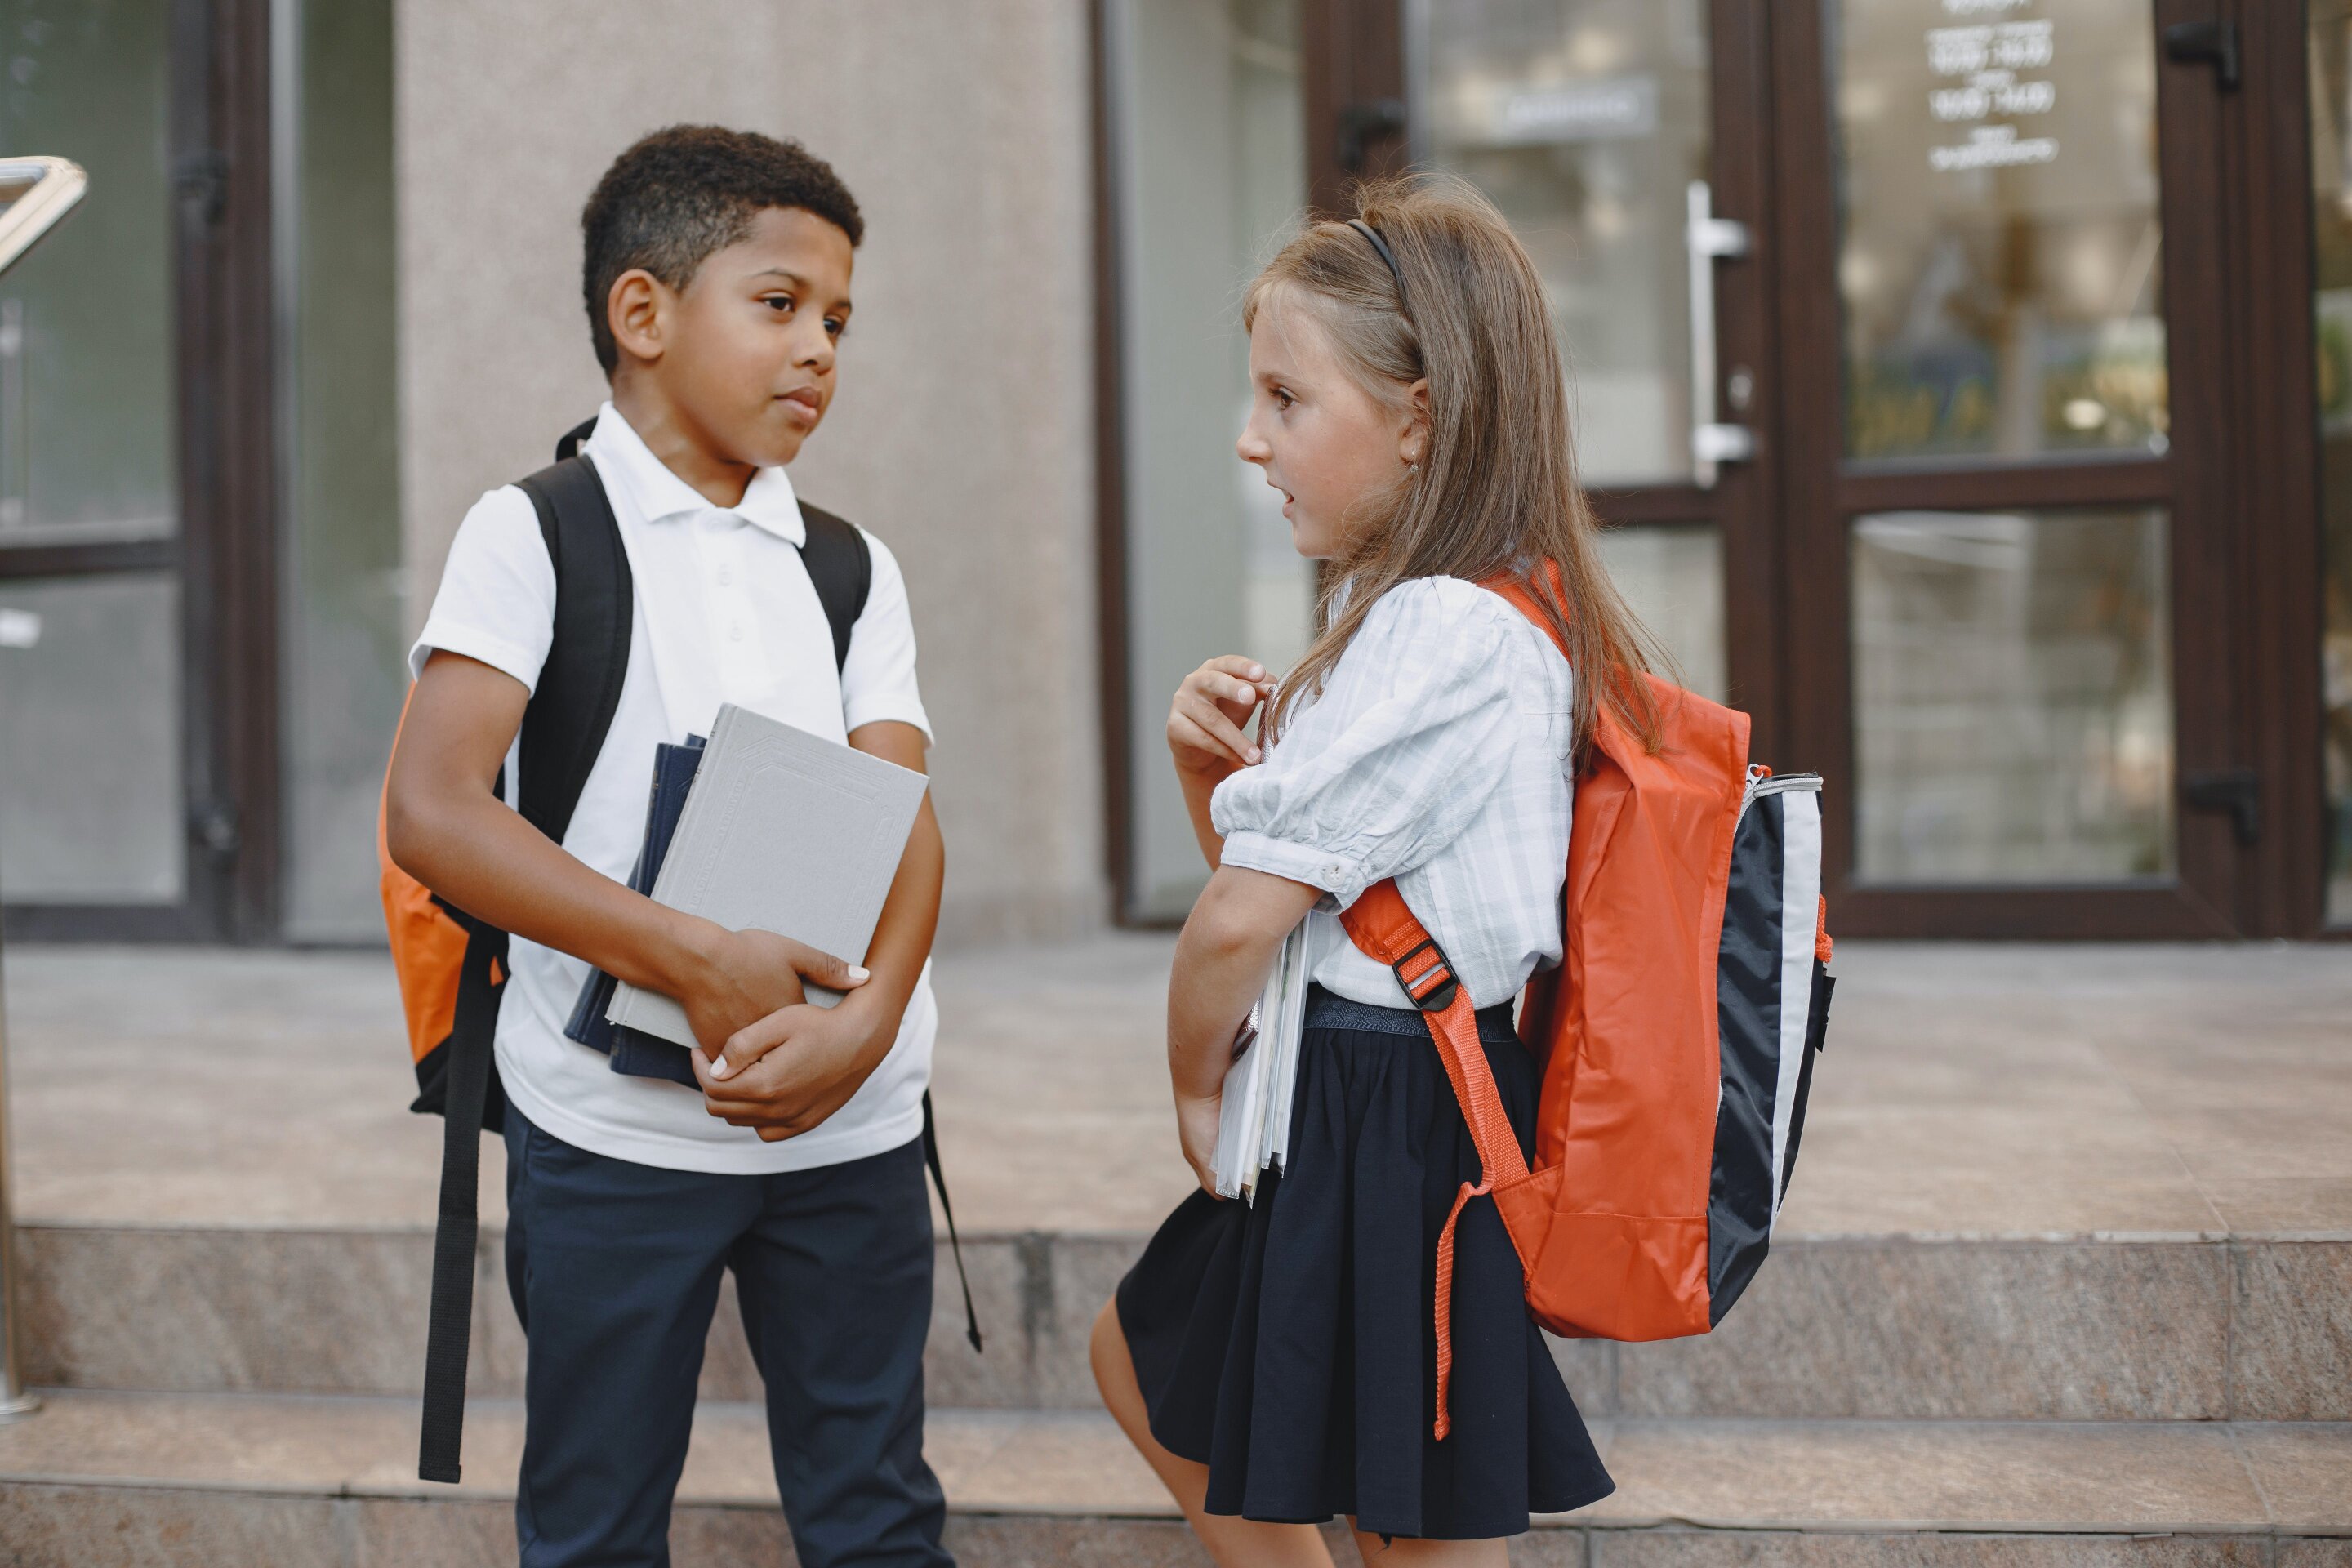 School uniforms don't improve child behavior, study finds